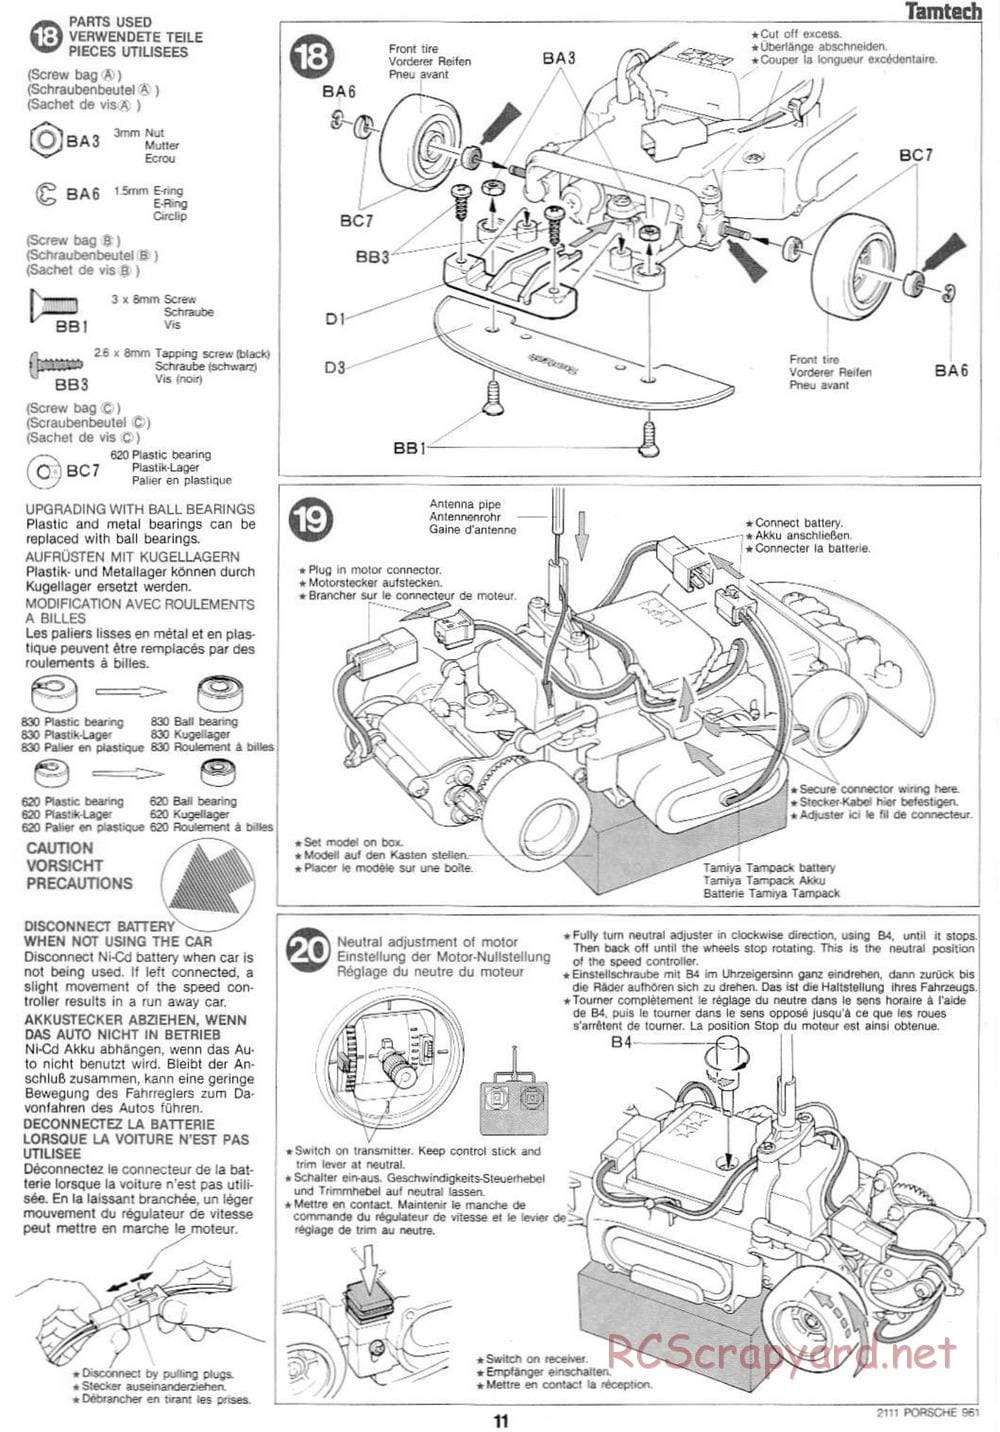 Tamiya - Tamtech - Porsche 961 Chassis - Manual - Page 11